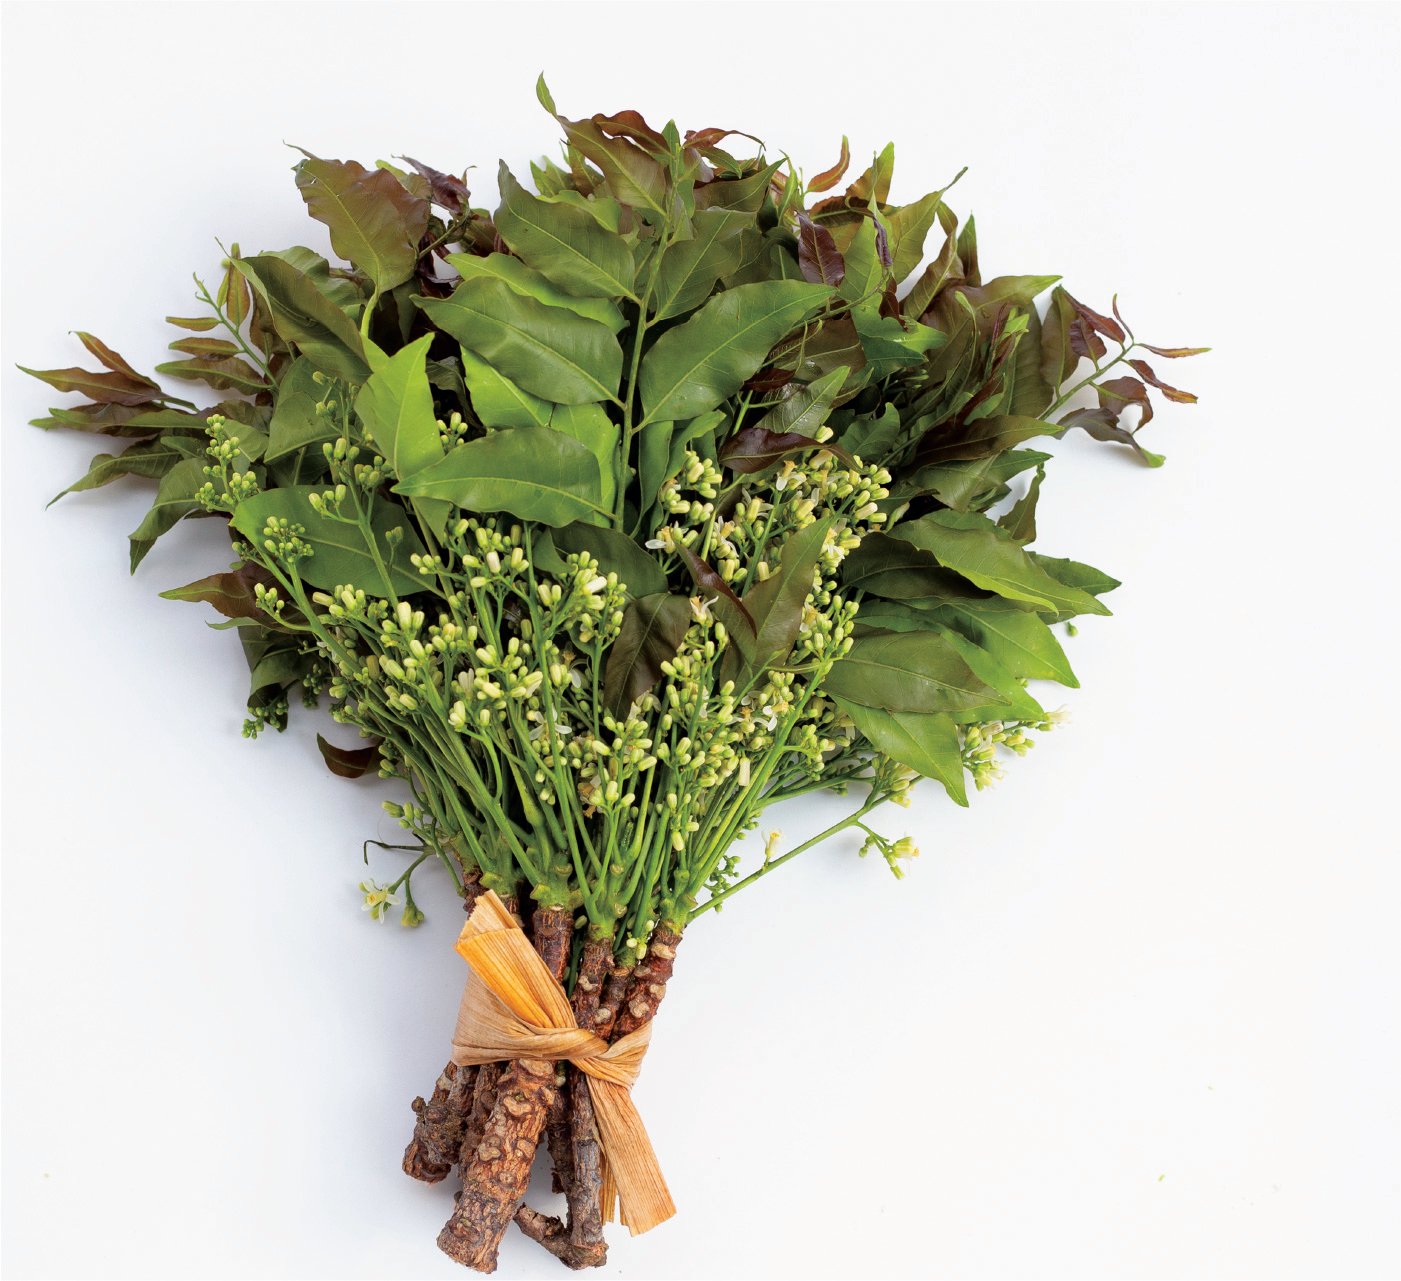 Neem, the ayurvedic herb has many health benefits